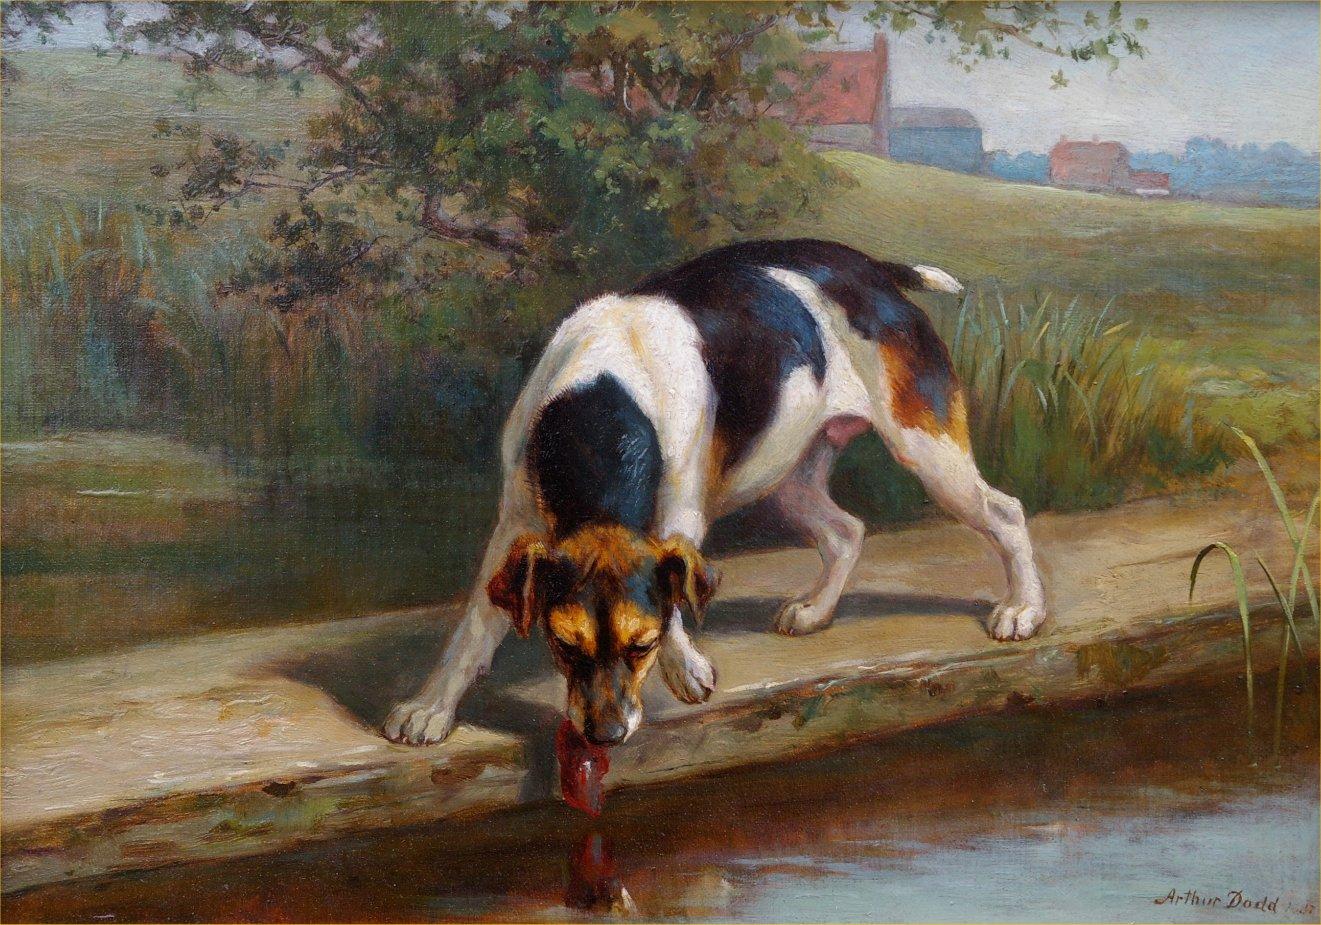 Arthur Dodd Animal Painting - Spotting his Reflection